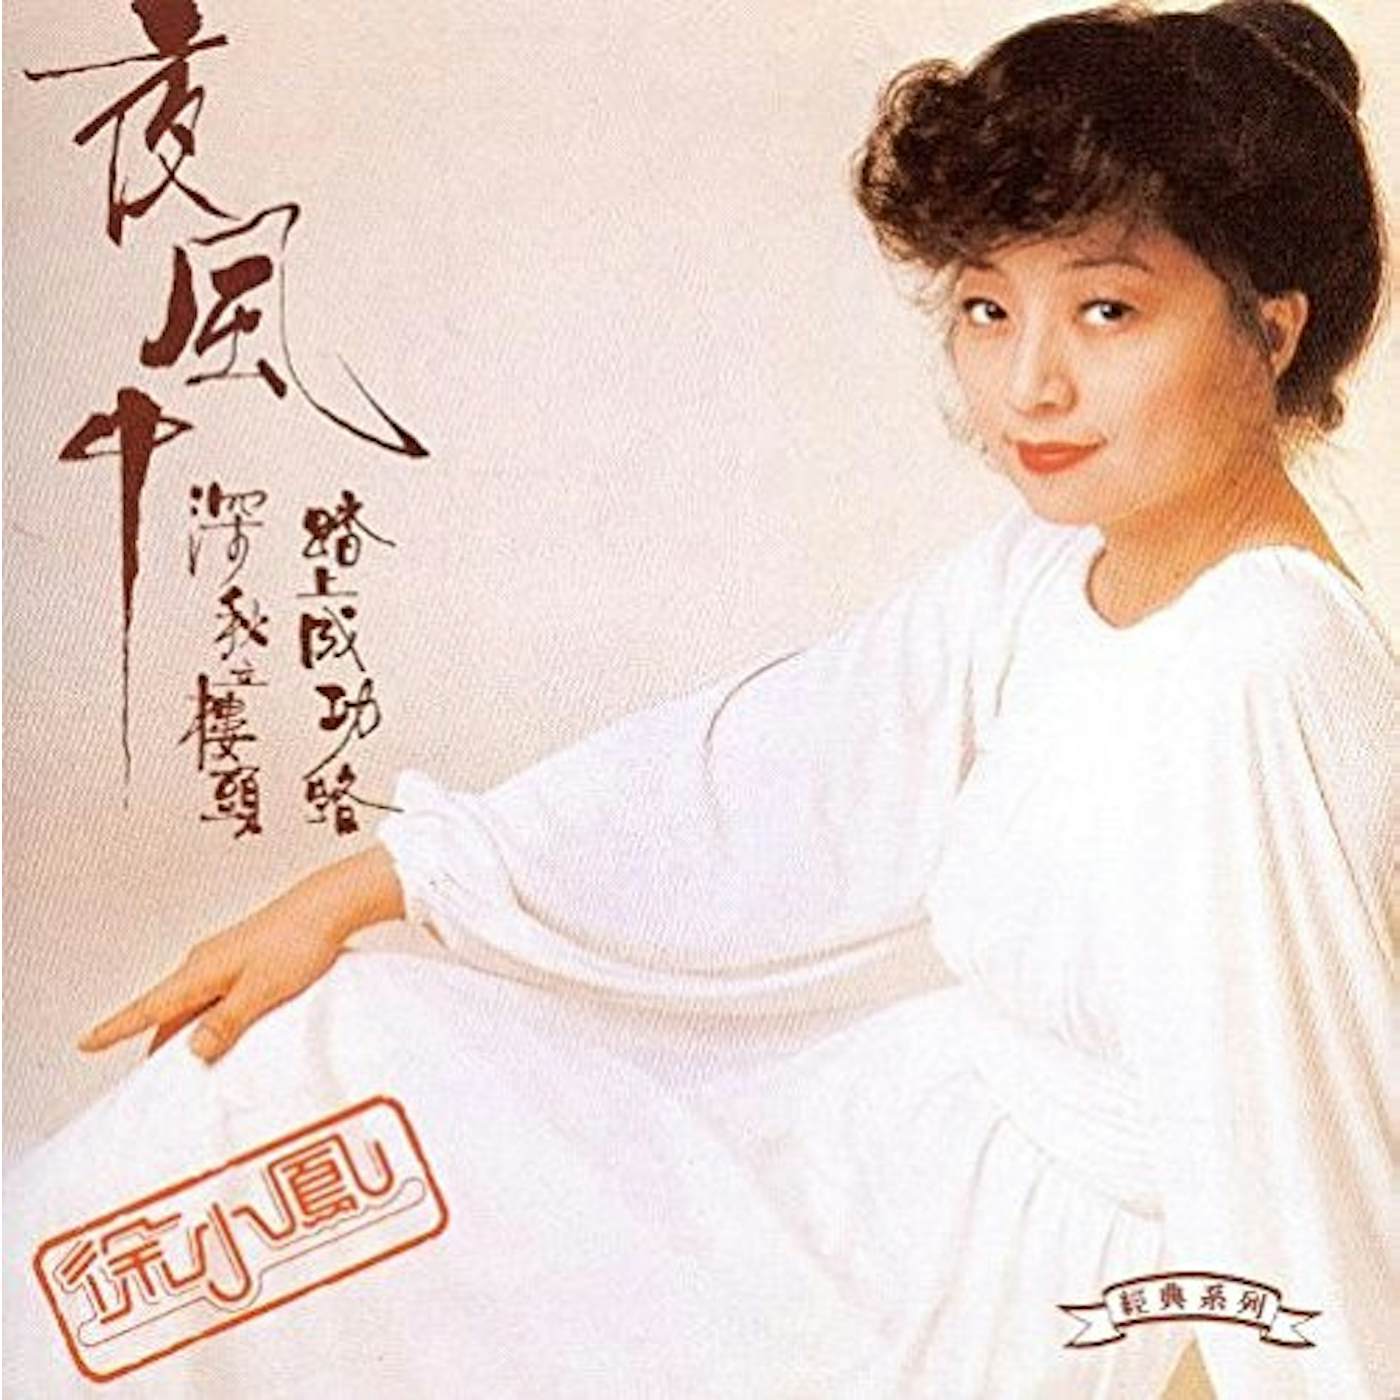 Paula Tsui IN THE NIGHT WIND: K2HD MASTERING CD